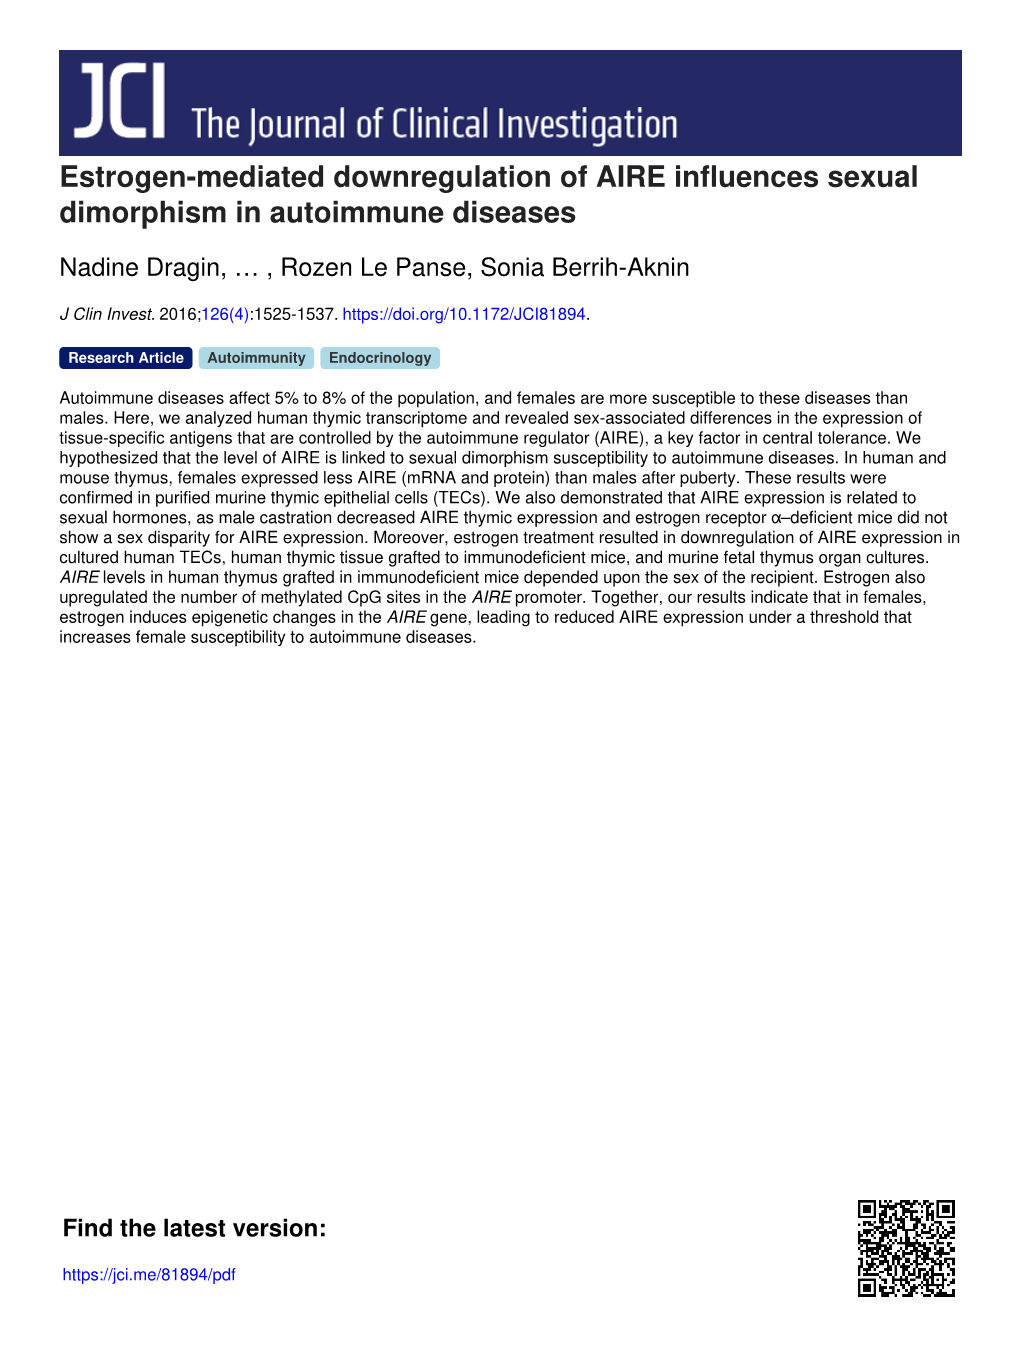 Estrogen-Mediated Downregulation of AIRE Influences Sexual Dimorphism in Autoimmune Diseases